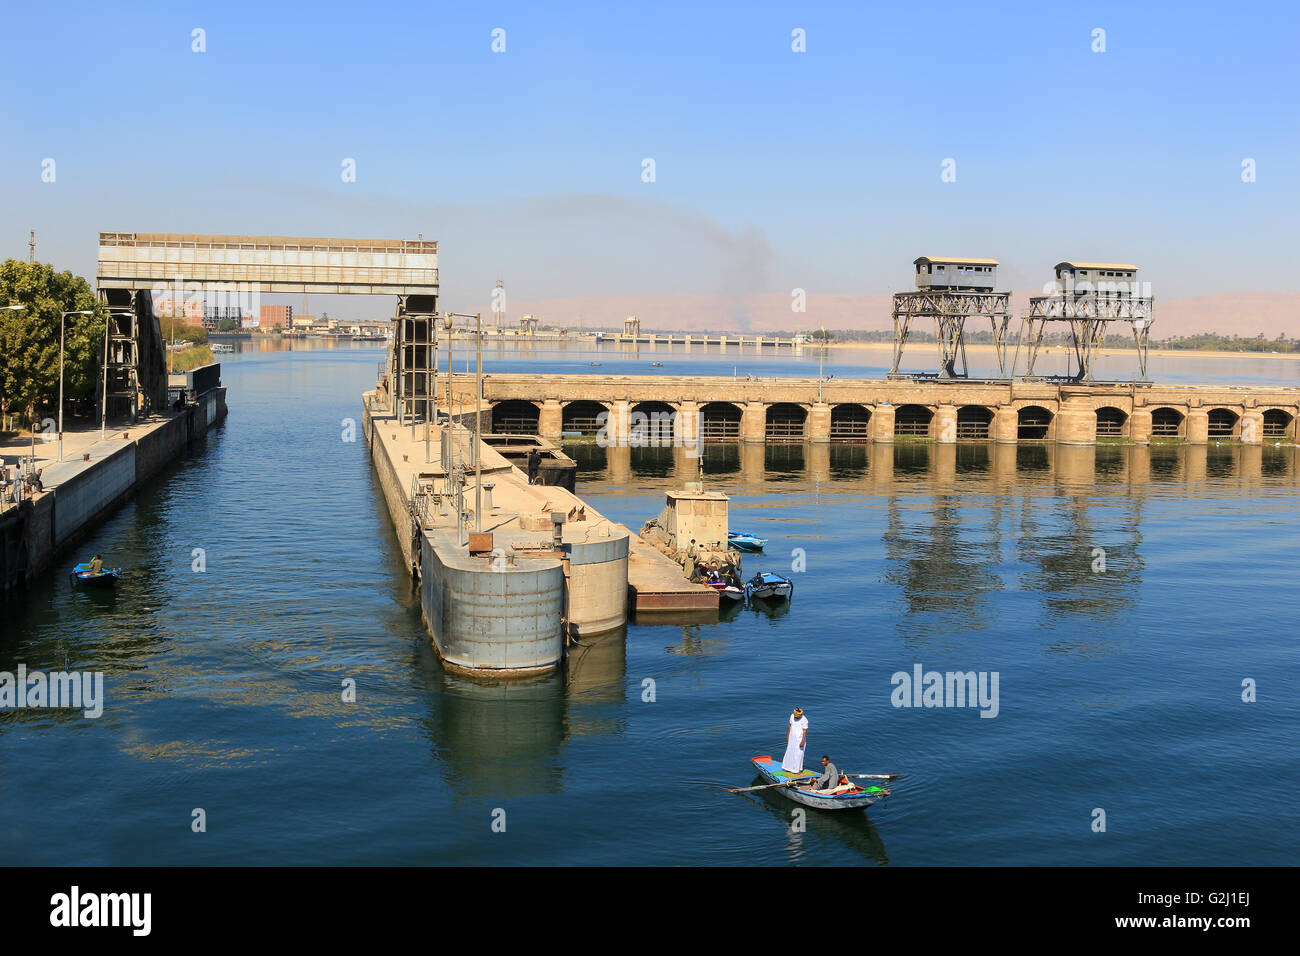 ESNA, Ägypten - 3. Februar 2016: Nähert sich das Schiff in Esna und alten Staudamm am Nil Fluß, Ägypten sperrt Stockfoto